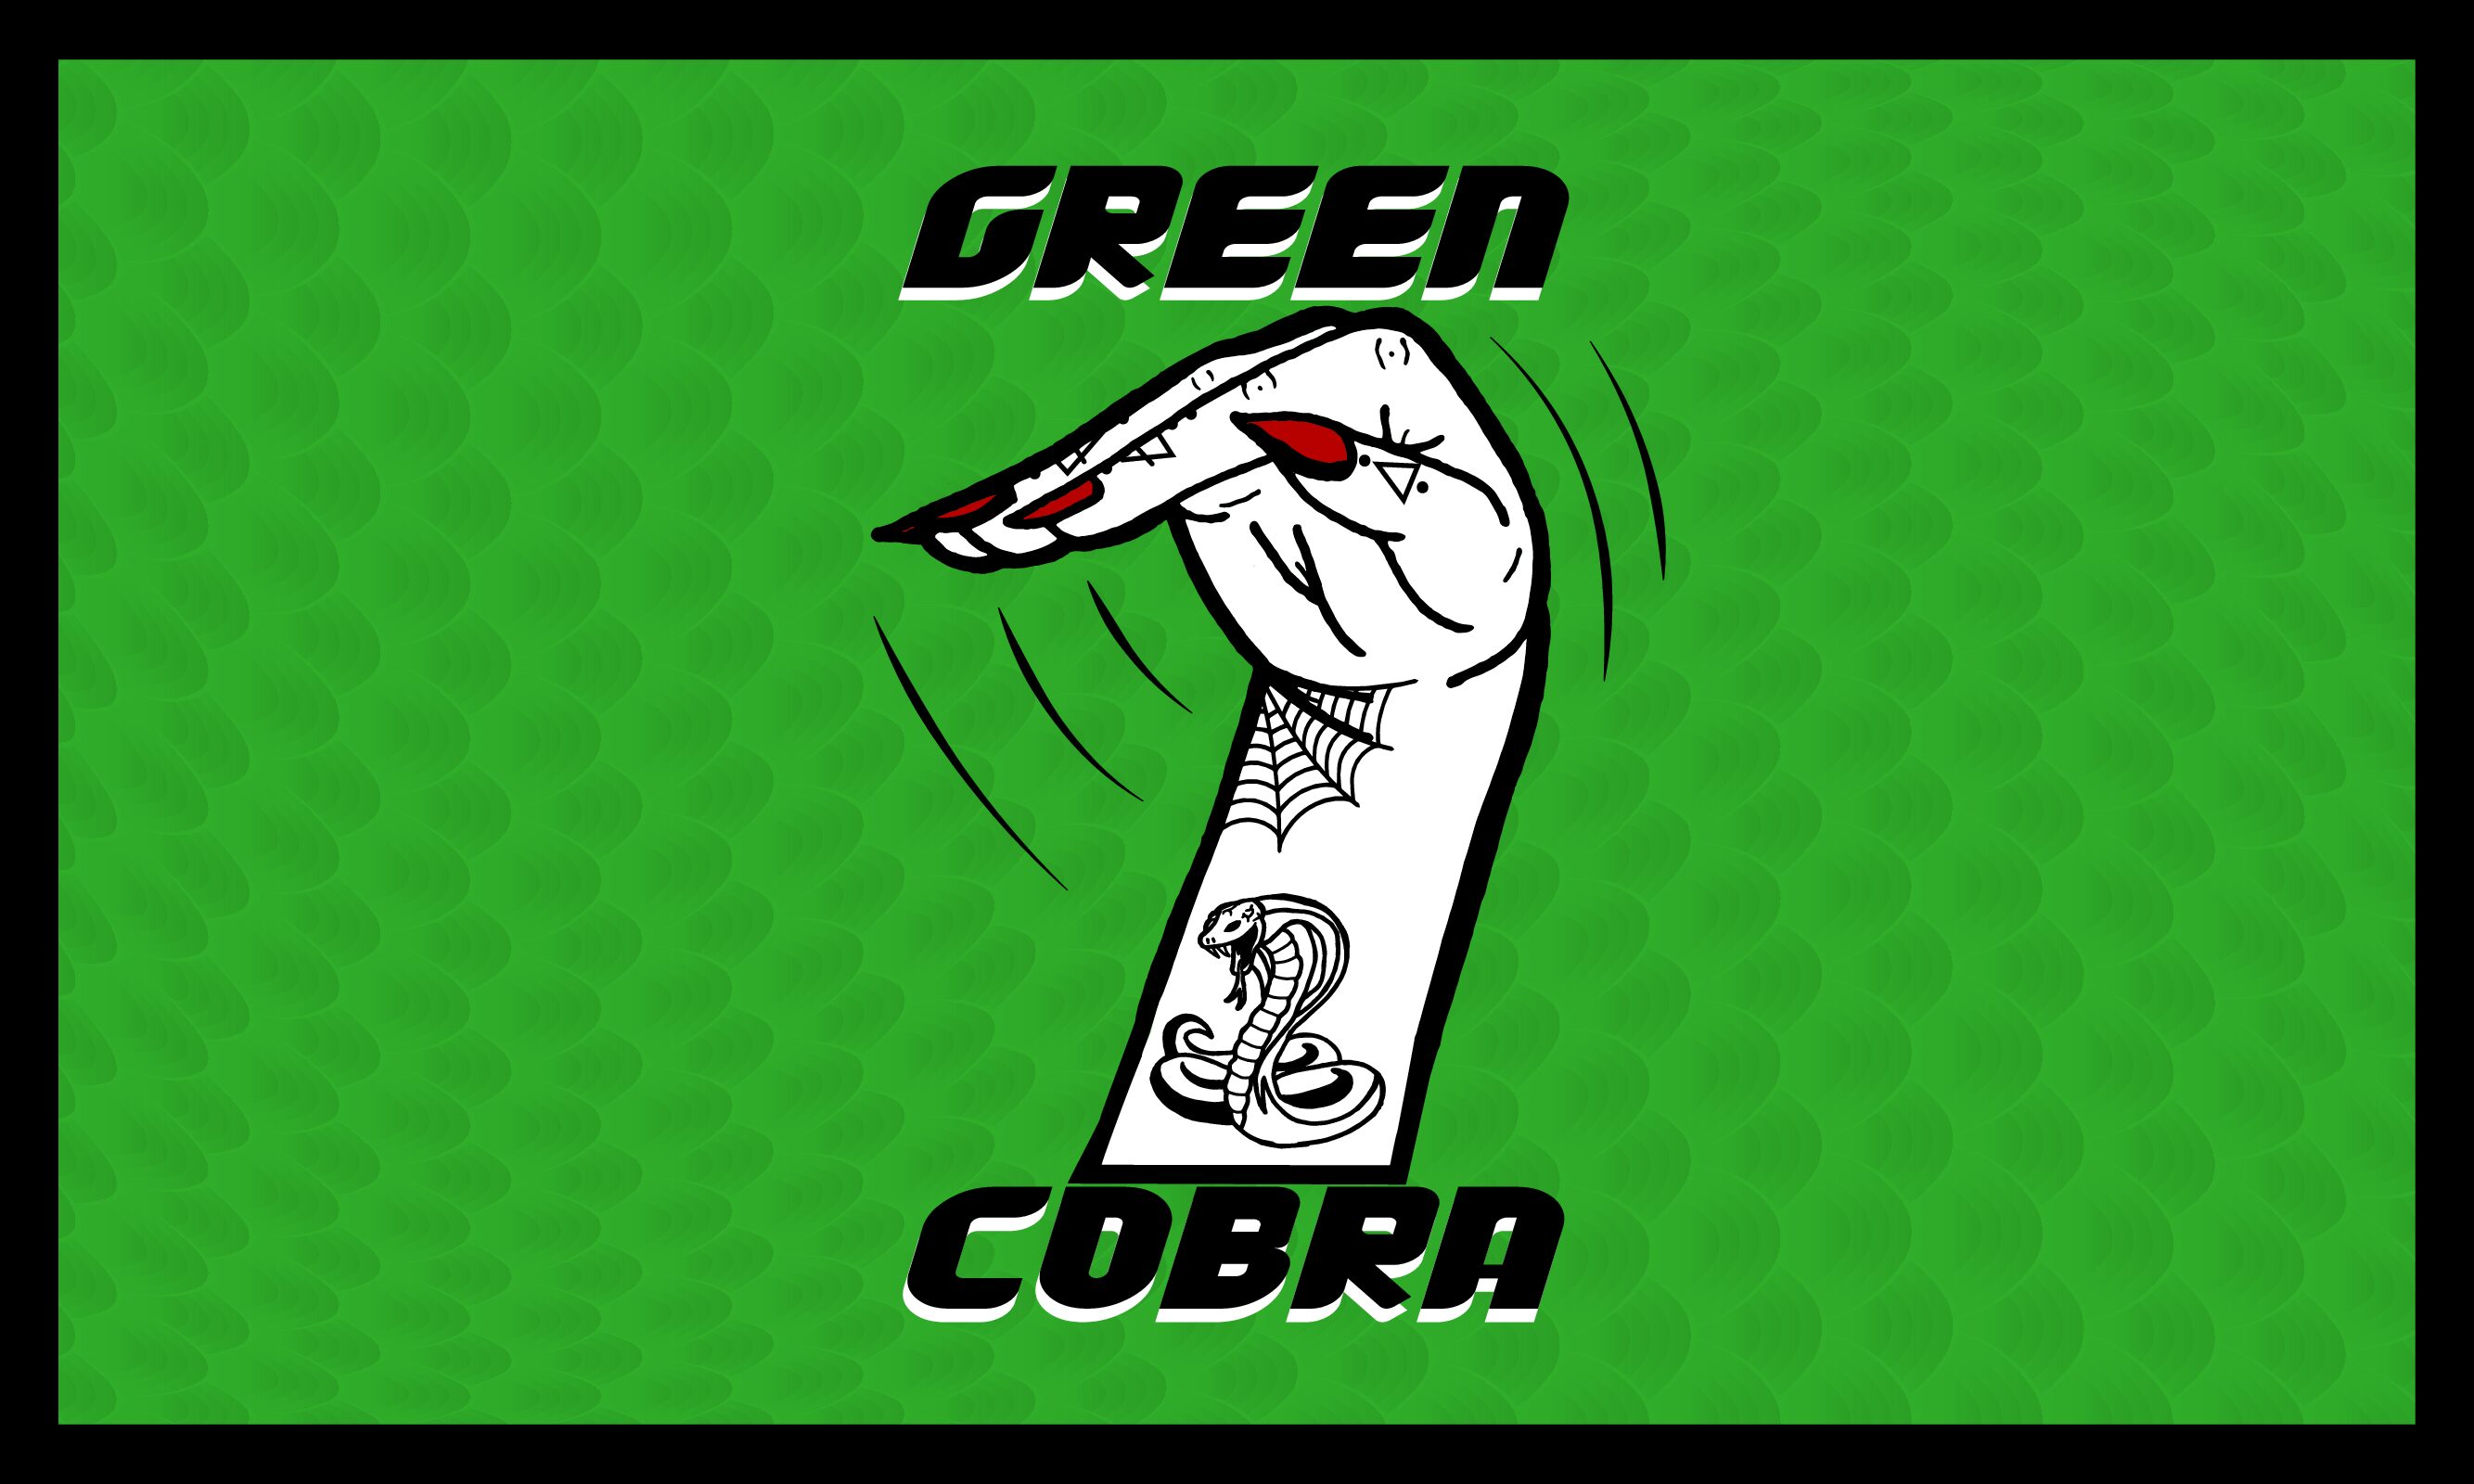 GREEN COBRA